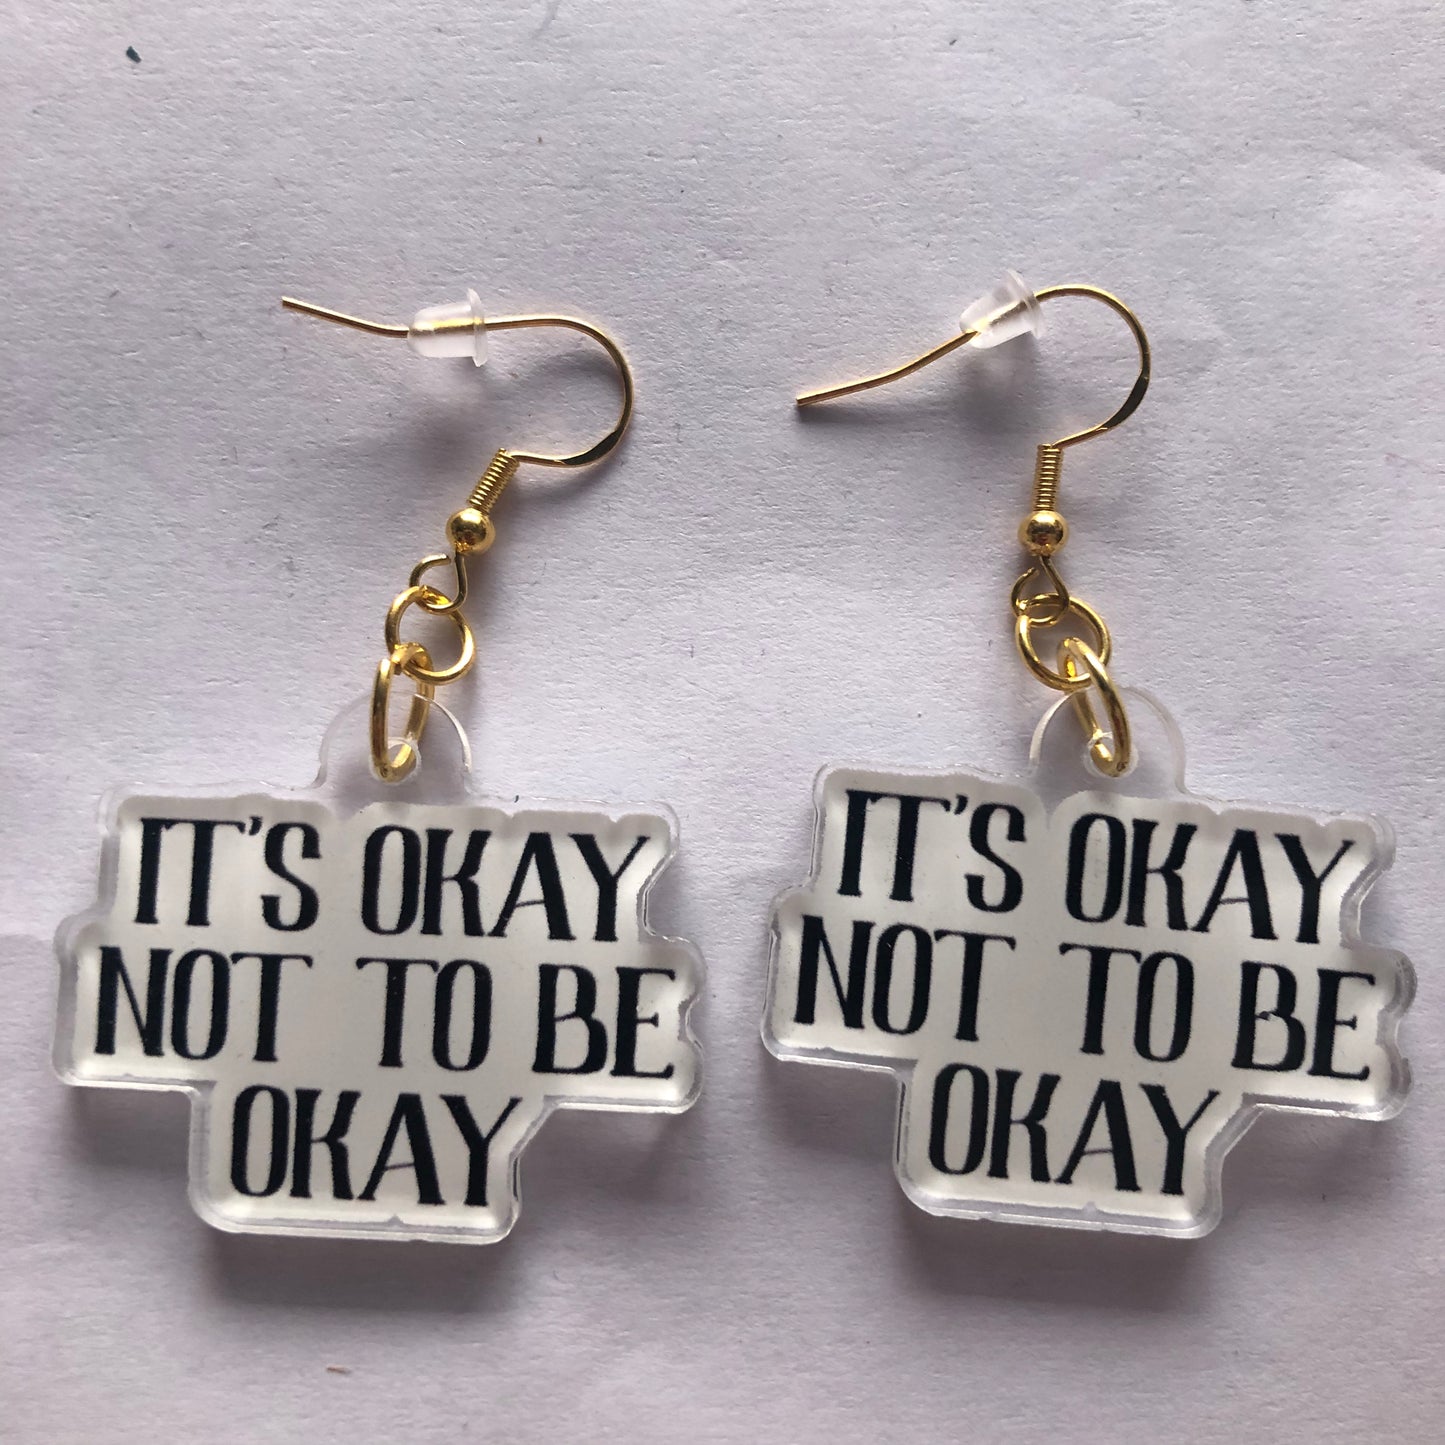 It’s okay not to be okay earrings